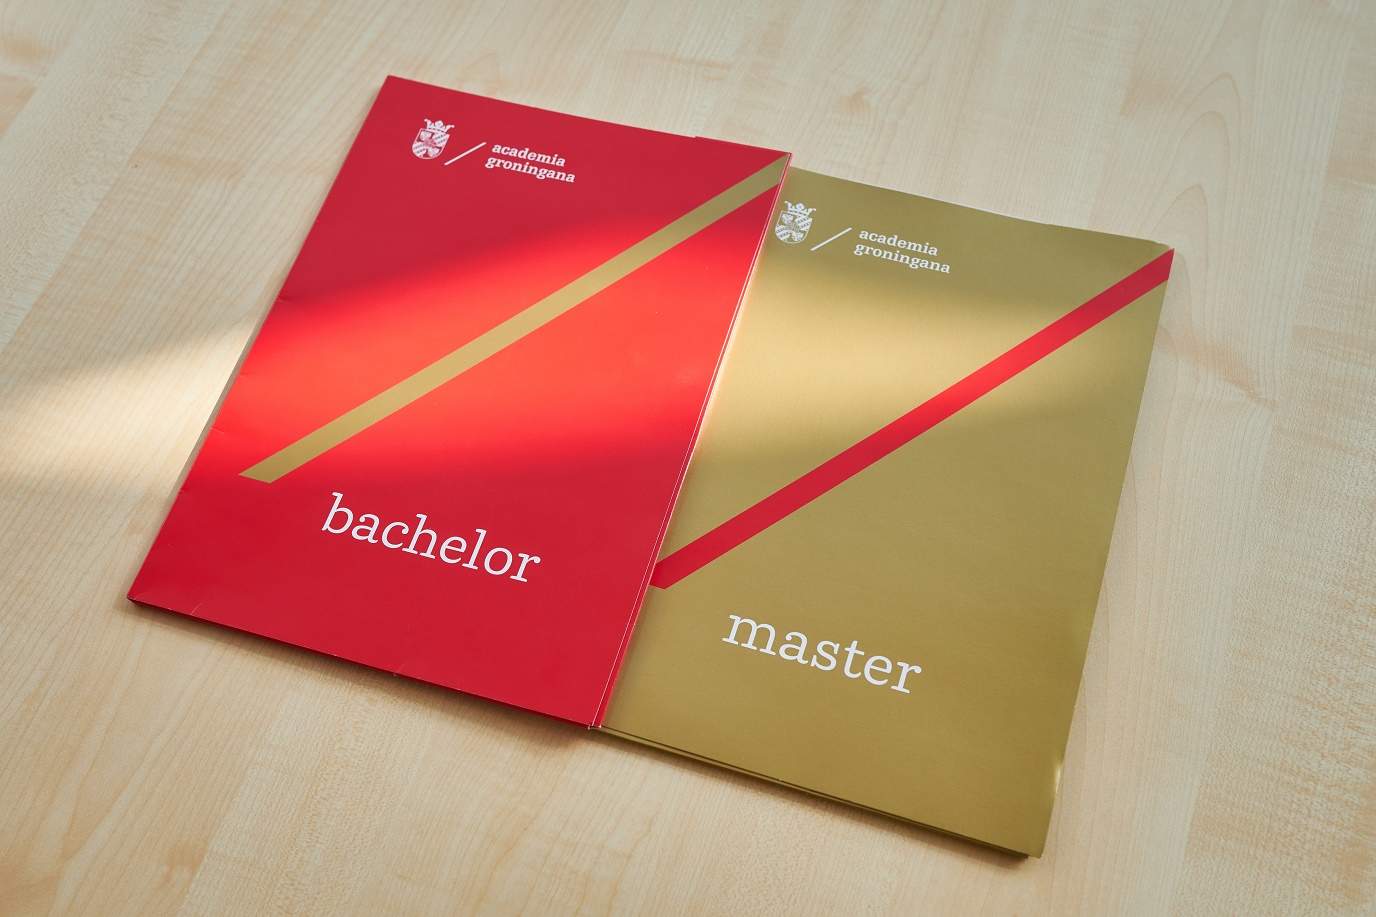 Master's degree programmes